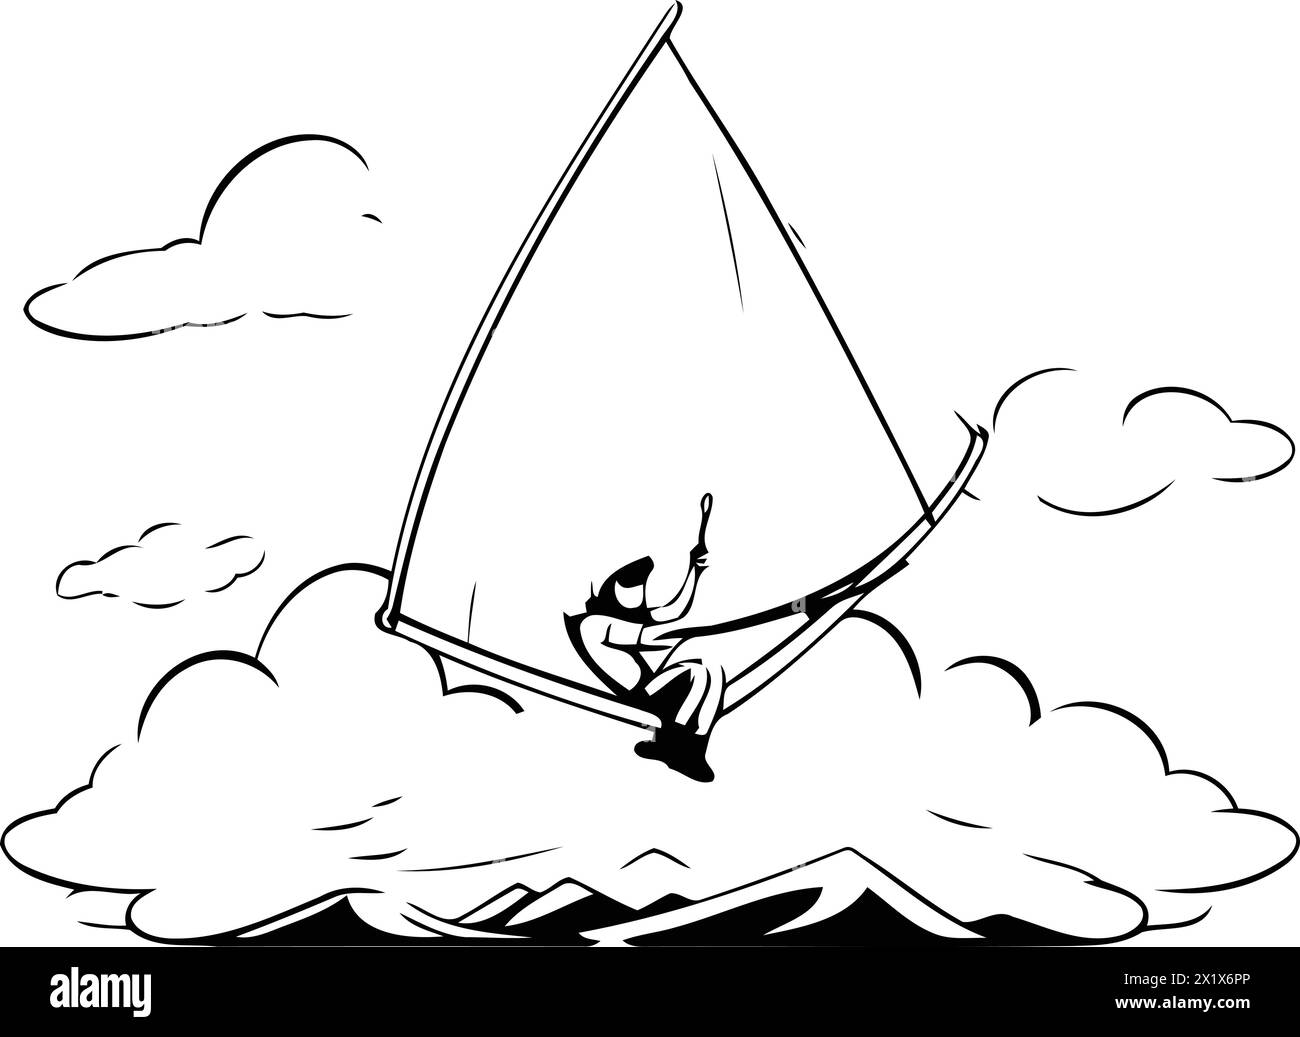 Design windsurf su sfondo bianco. illustrazione vettoriale eps10 Illustrazione Vettoriale